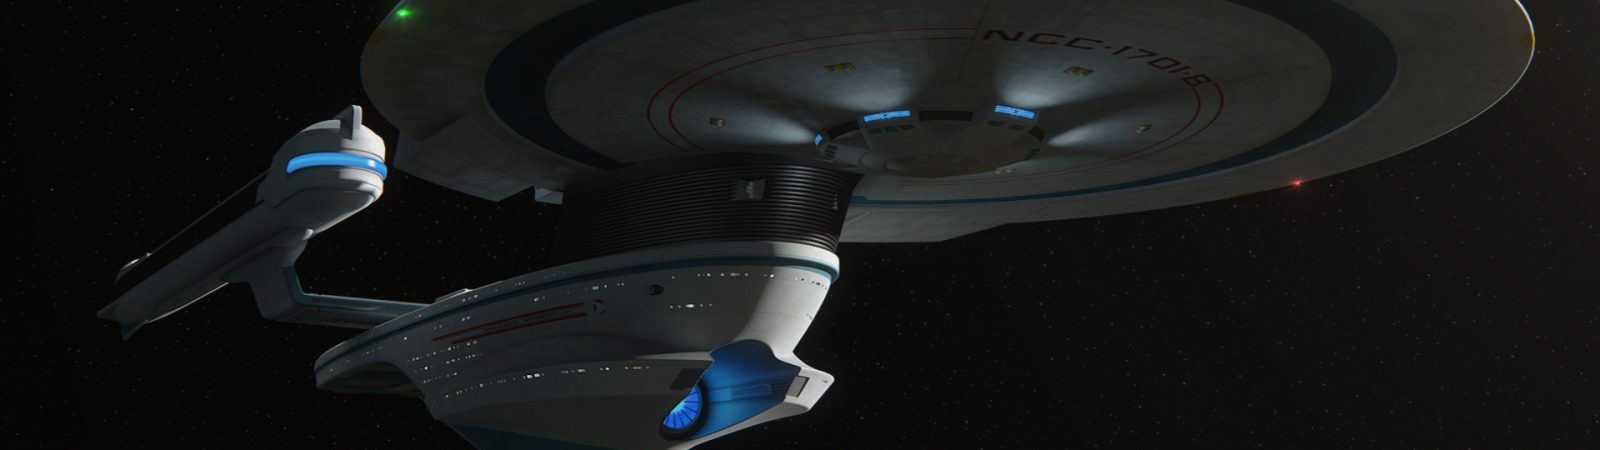 Vulcan ships progress #5